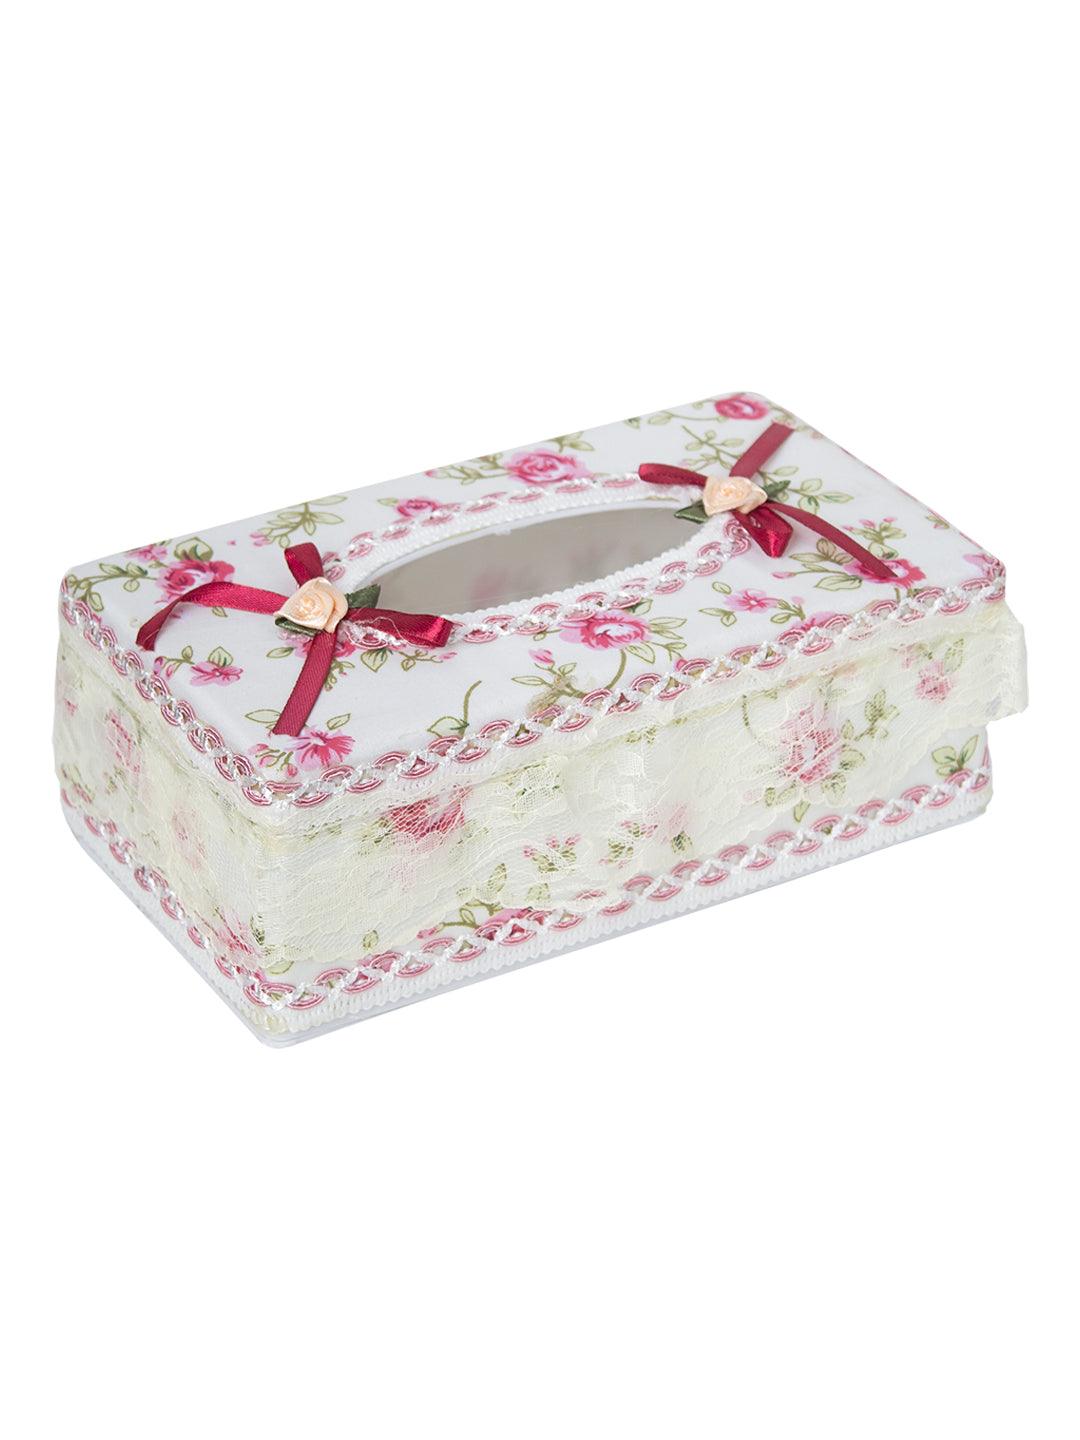 Tissue Box Holder, Cream & Red Colour, Plastic - MARKET 99